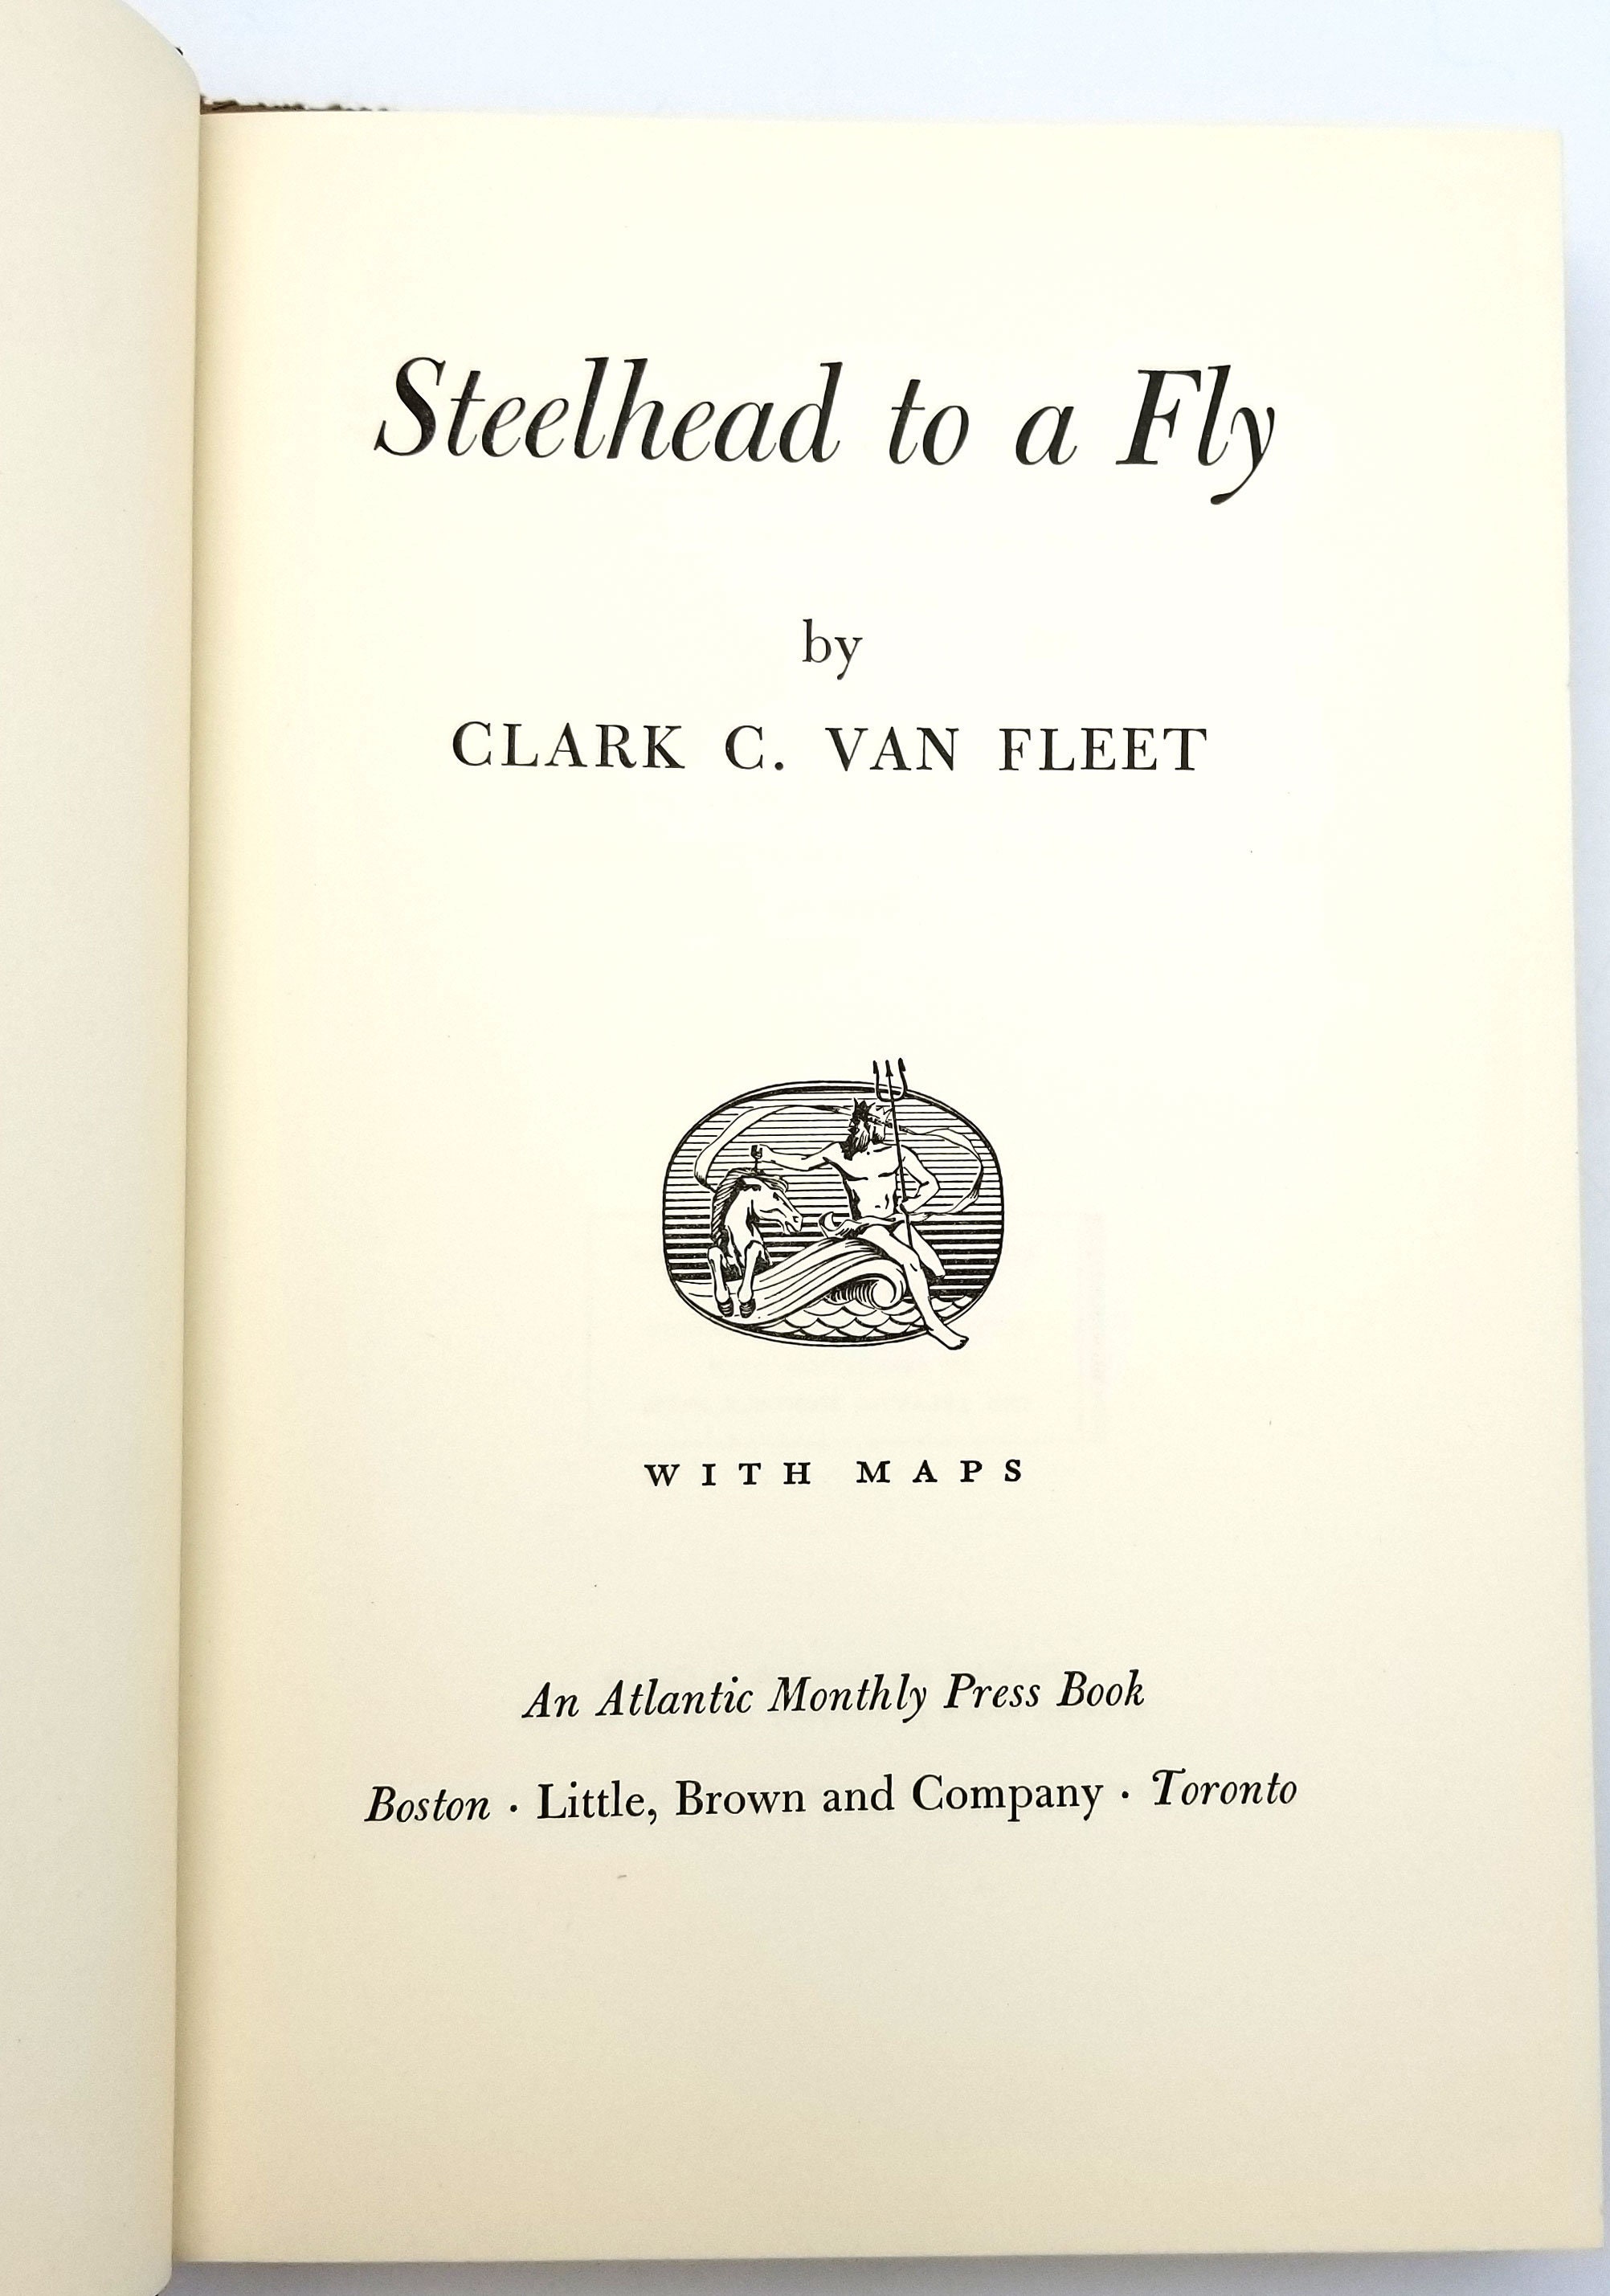 Steelhead to a Fly 1st Edition in Dust Jacket 1954 Clark C. Van